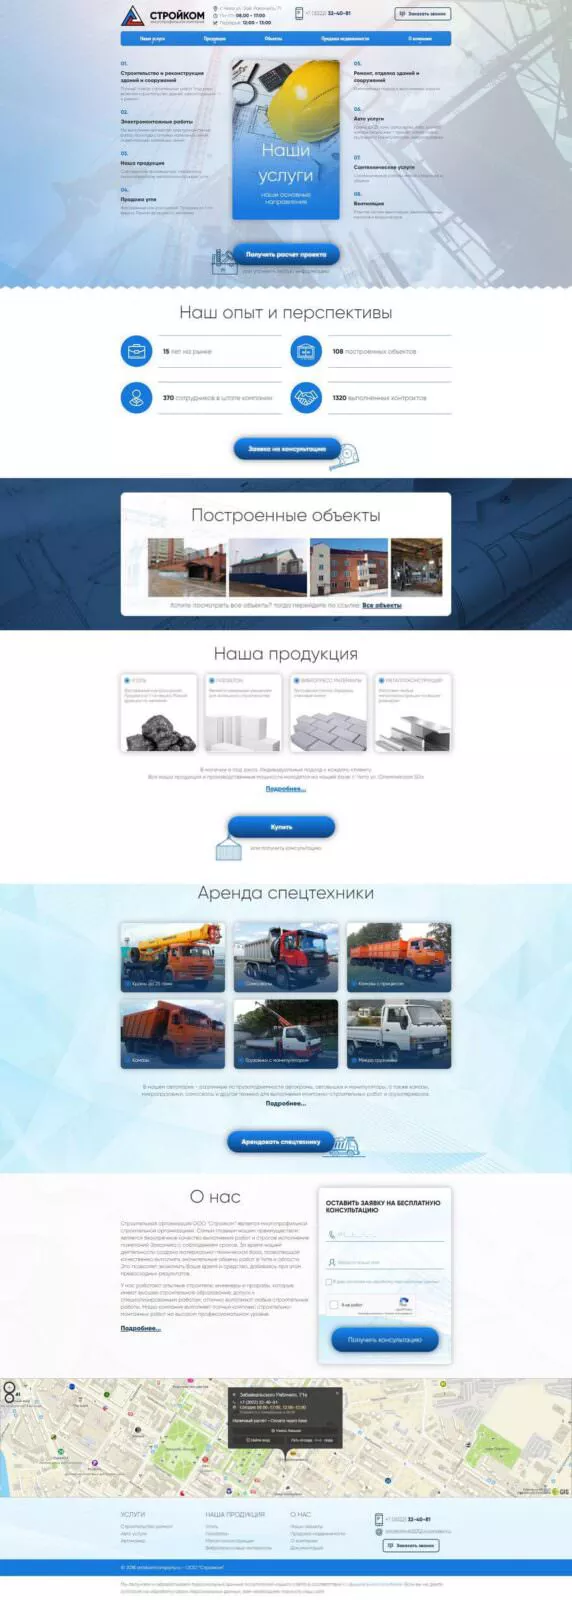 stroikomcompany.ru 056 - Сайт производителя стройматериалов